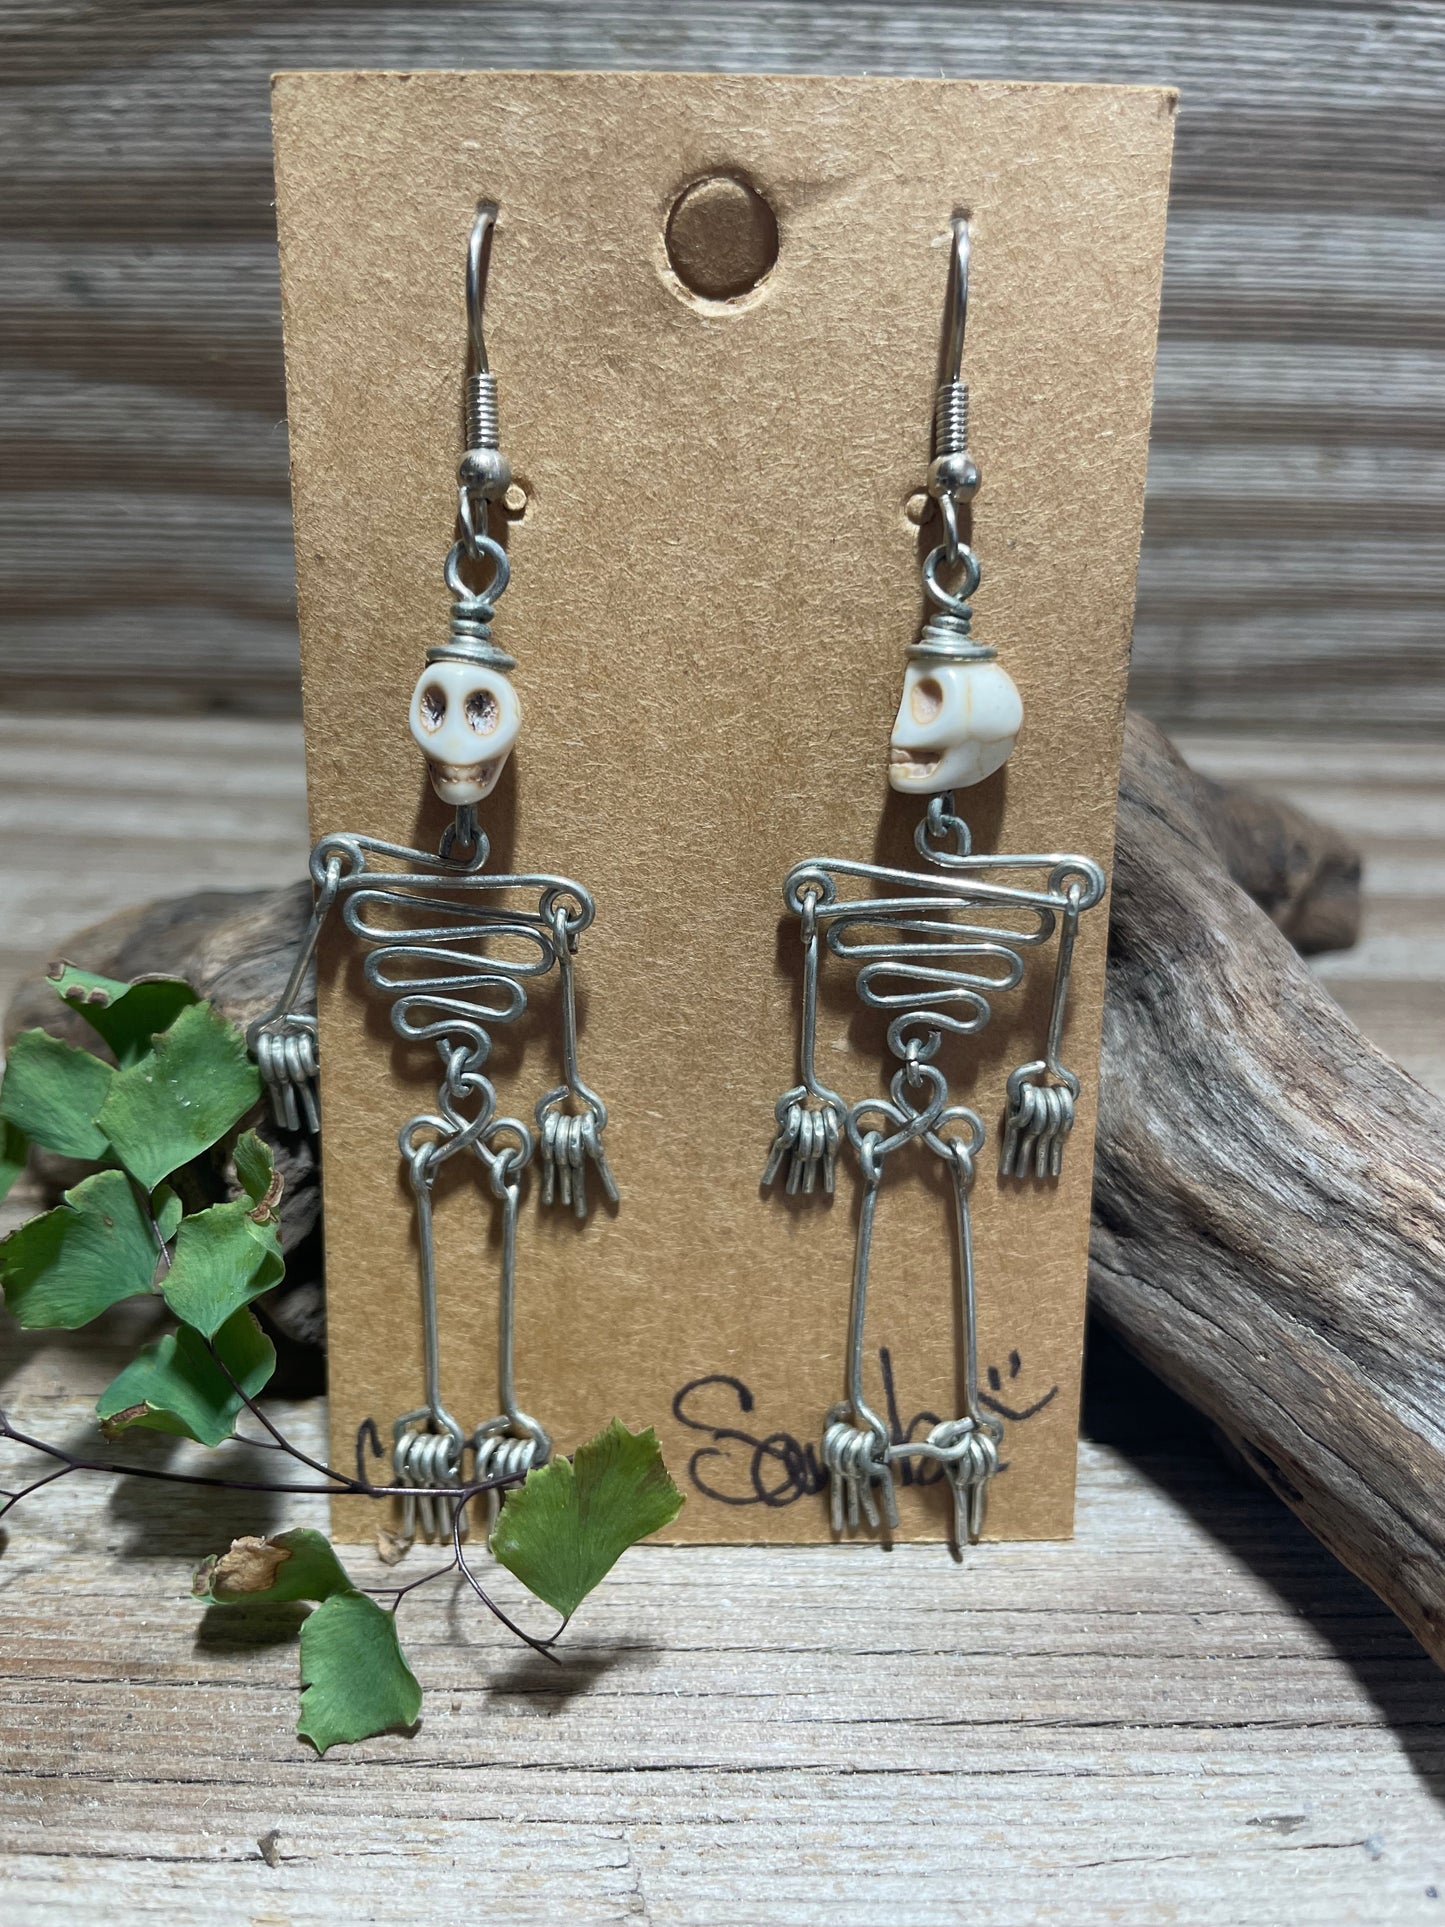 Dancing Skeleton Articulated Earrings Sterling Silver & Copper w Skull Beads